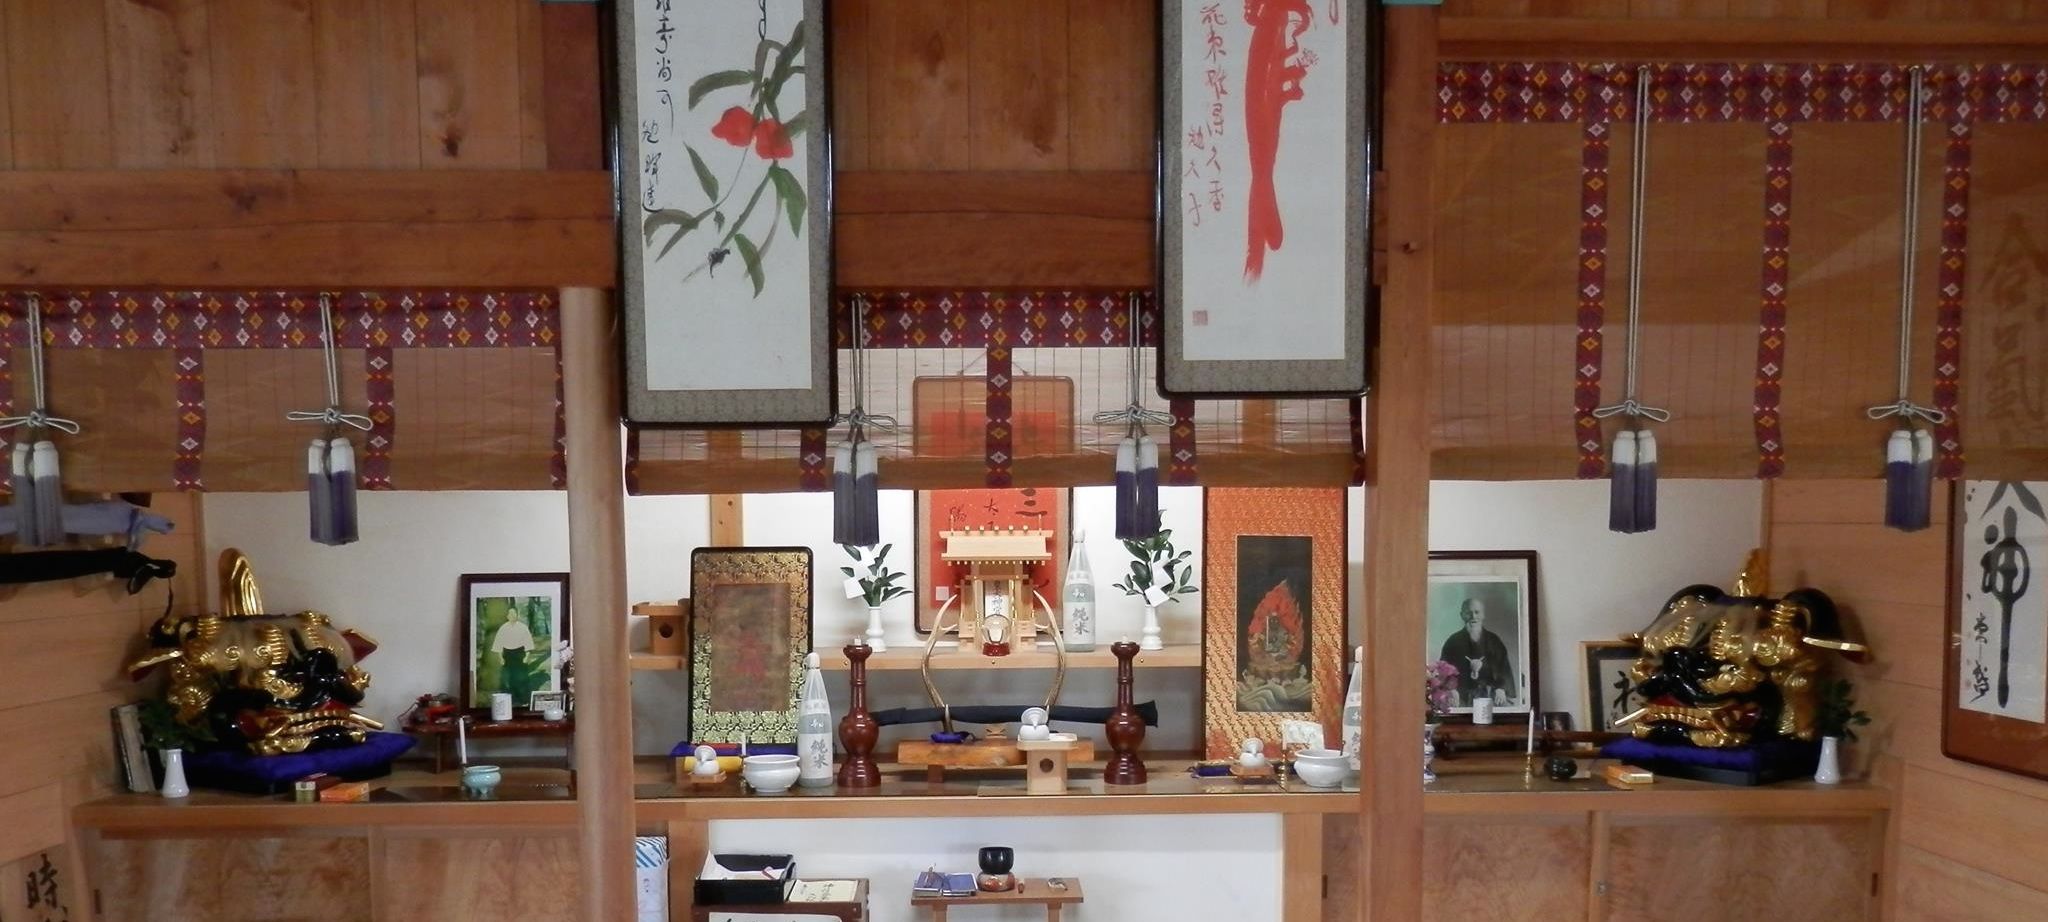 Tanren Kan Headquarters Dojo, Iwama, Japan 2014